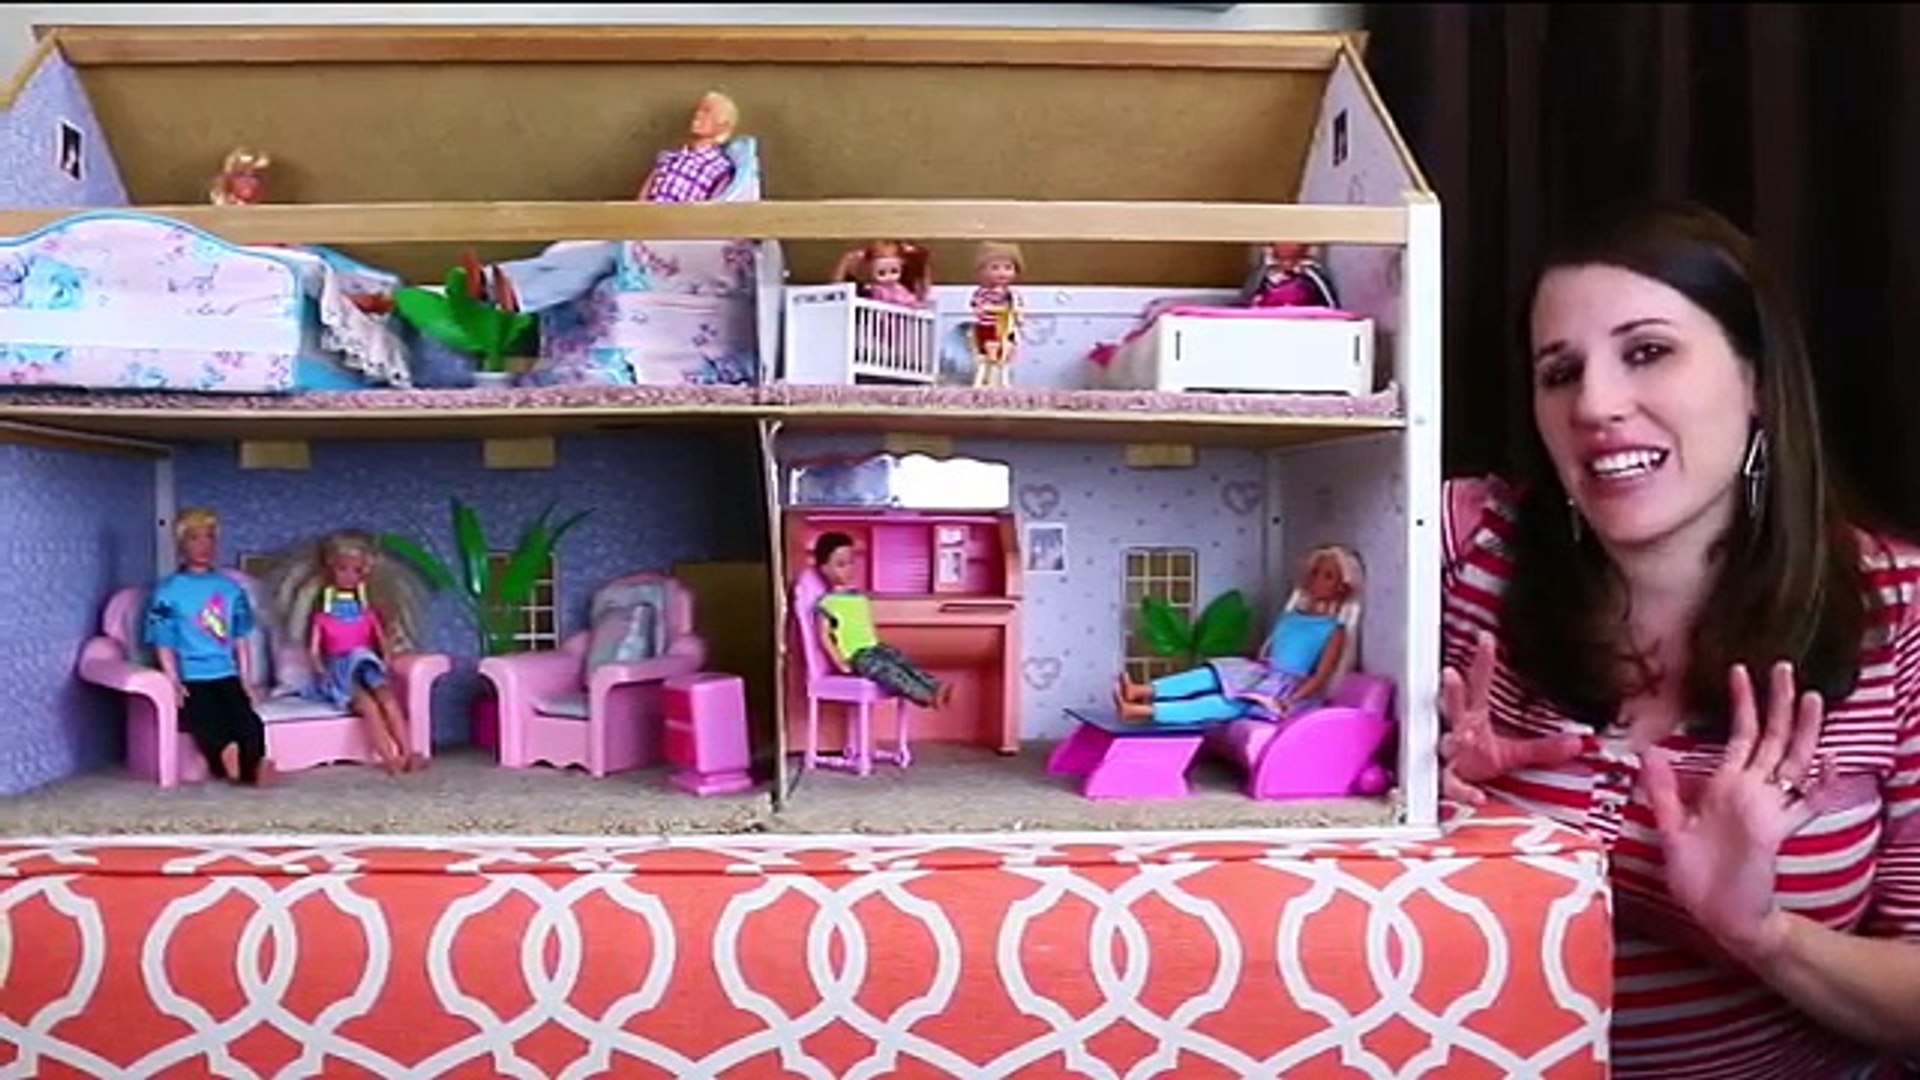 90s barbie house